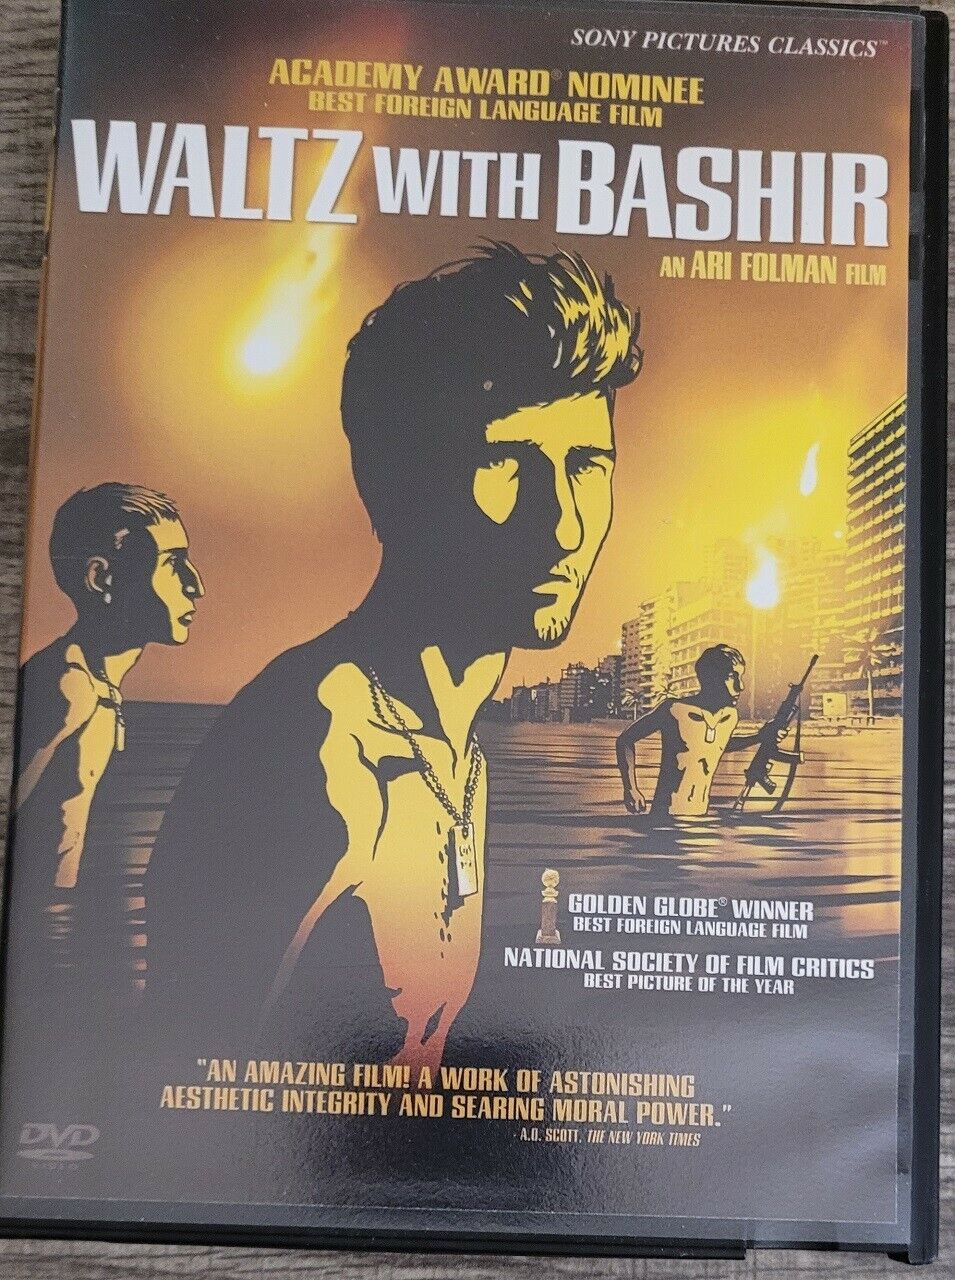 Waltz With Bashir (DVD, Animation, Hebrew Language, R1, Drama) | eBay